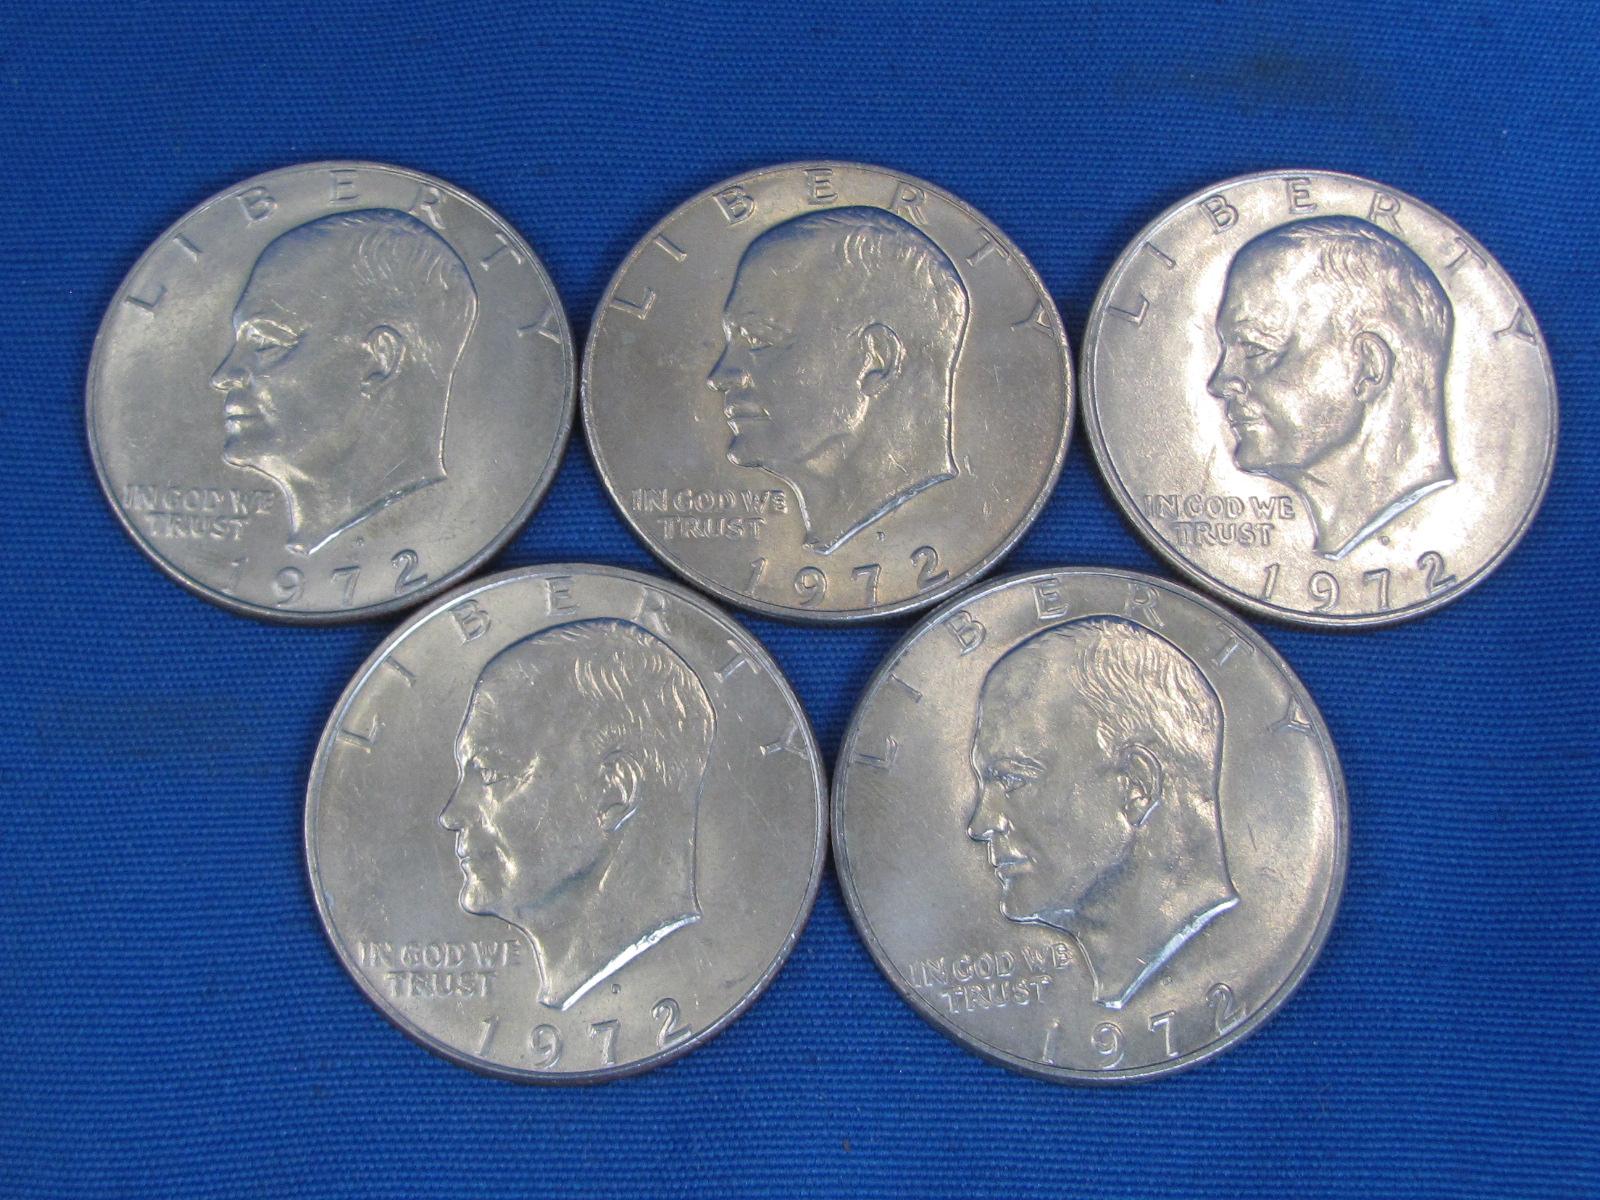 Lot of 13 Eisenhower Dollars – 1972, 1 Bicentennial